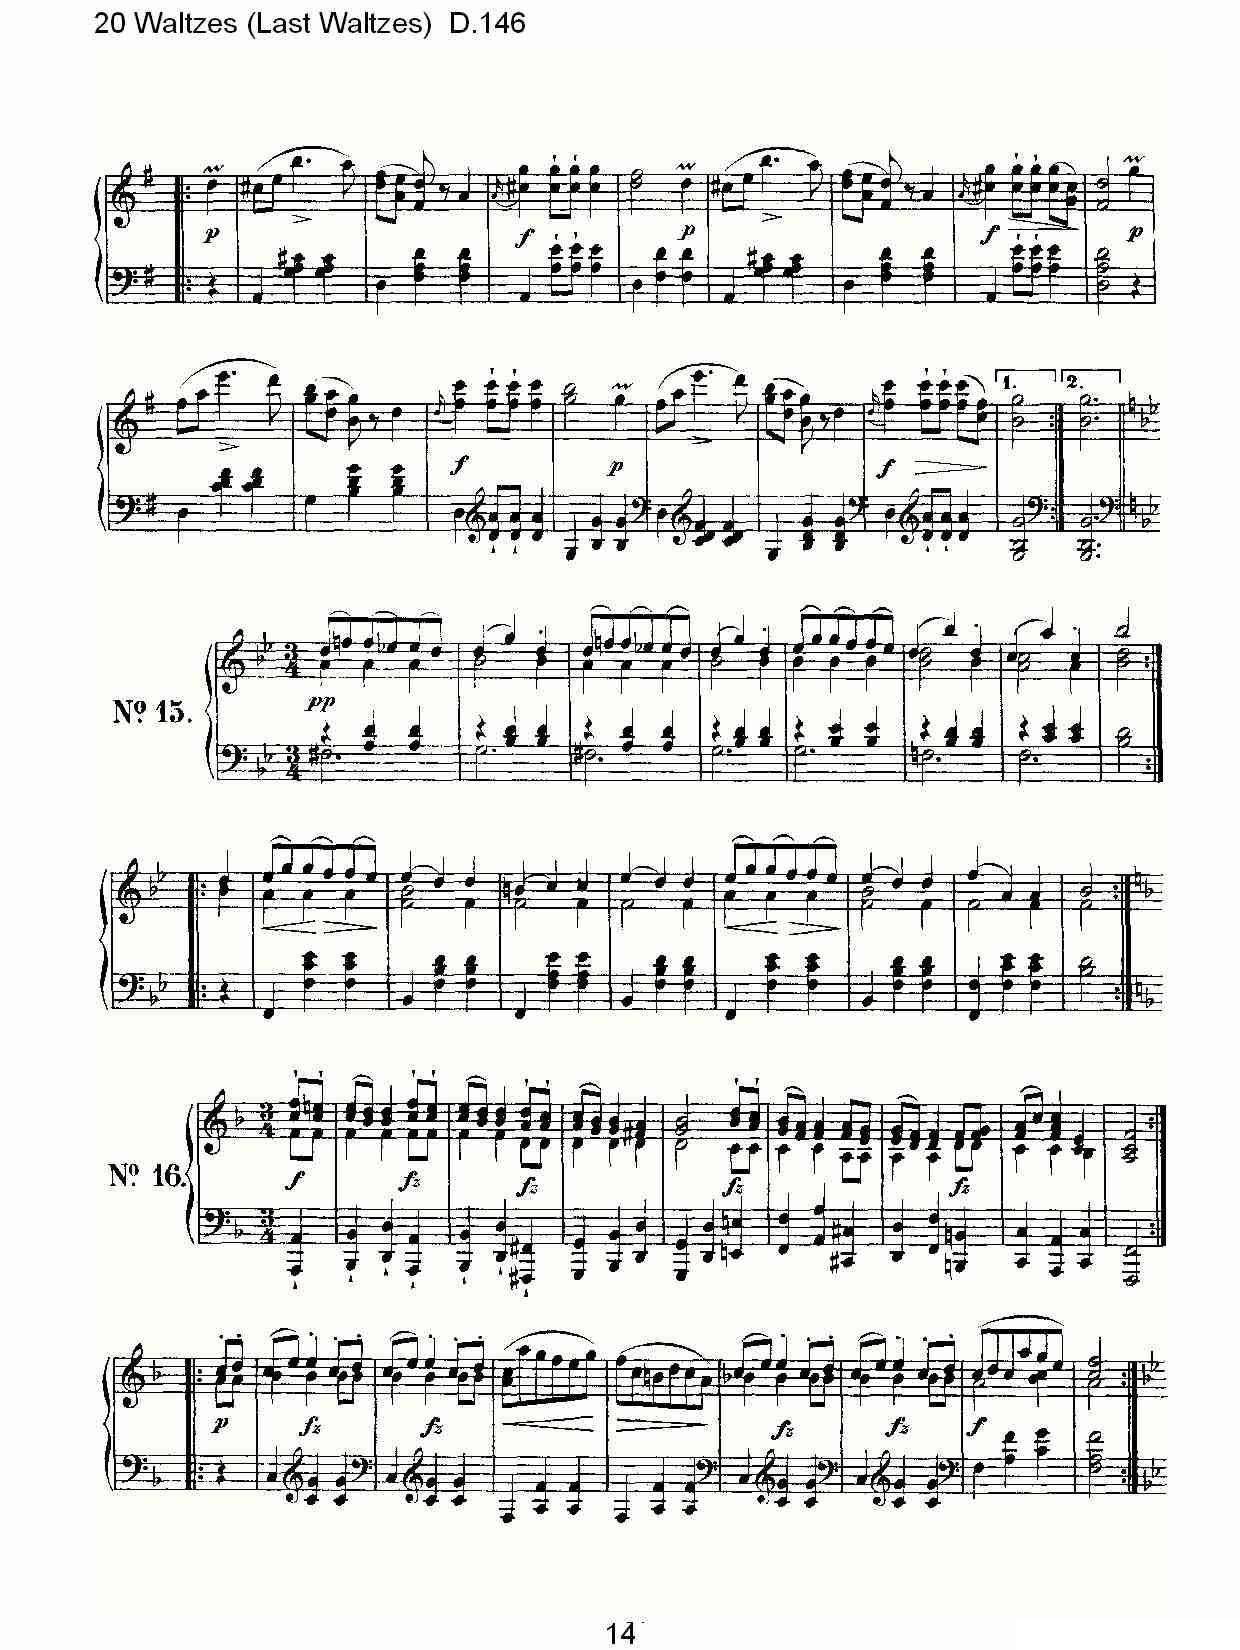 20 Waltzes（Last Waltzes) D.14）钢琴曲谱（图14）